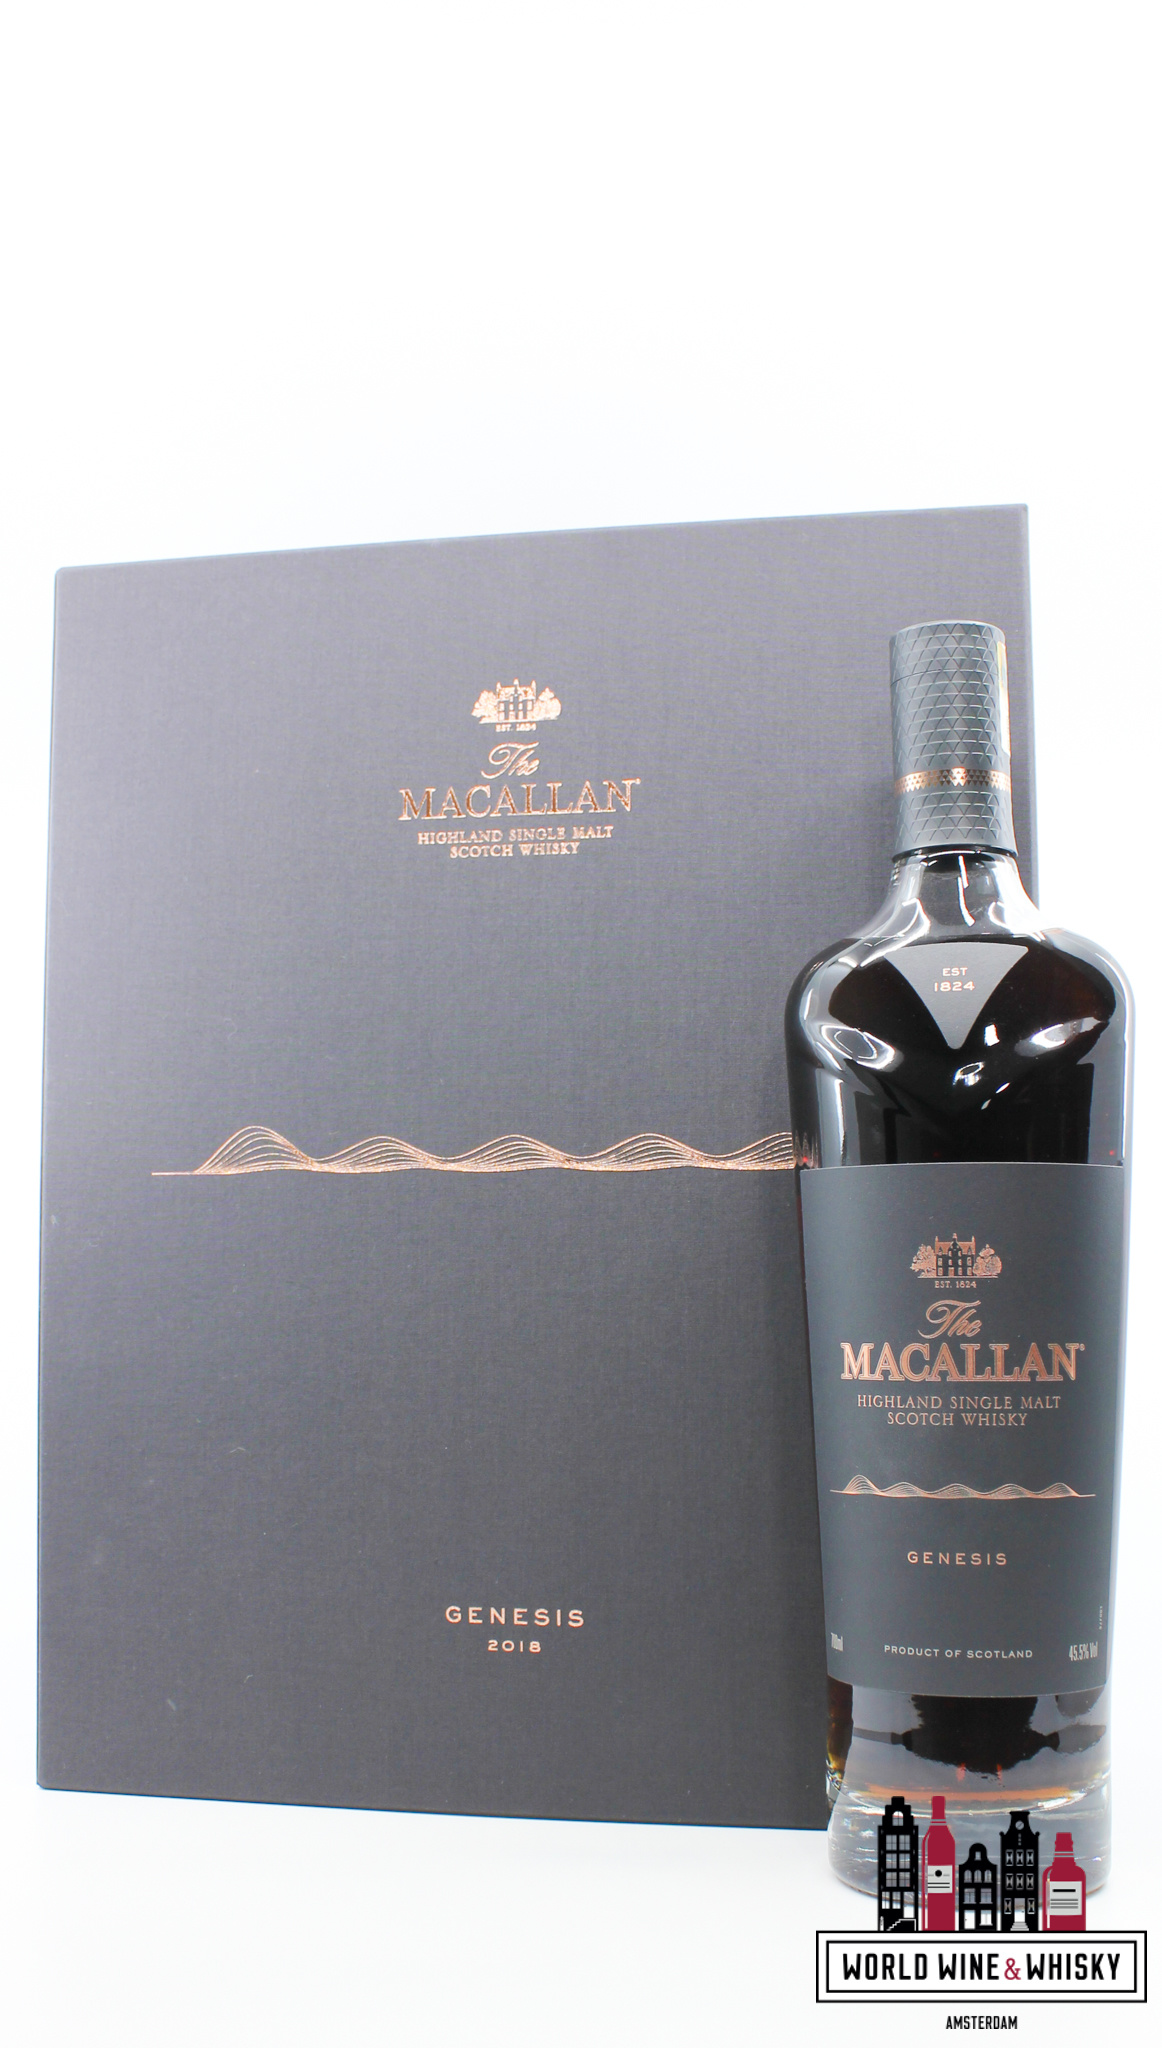 Macallan Macallan 2018 Genesis - Limited Edition 45.5% - Full Set (1 of 2500)